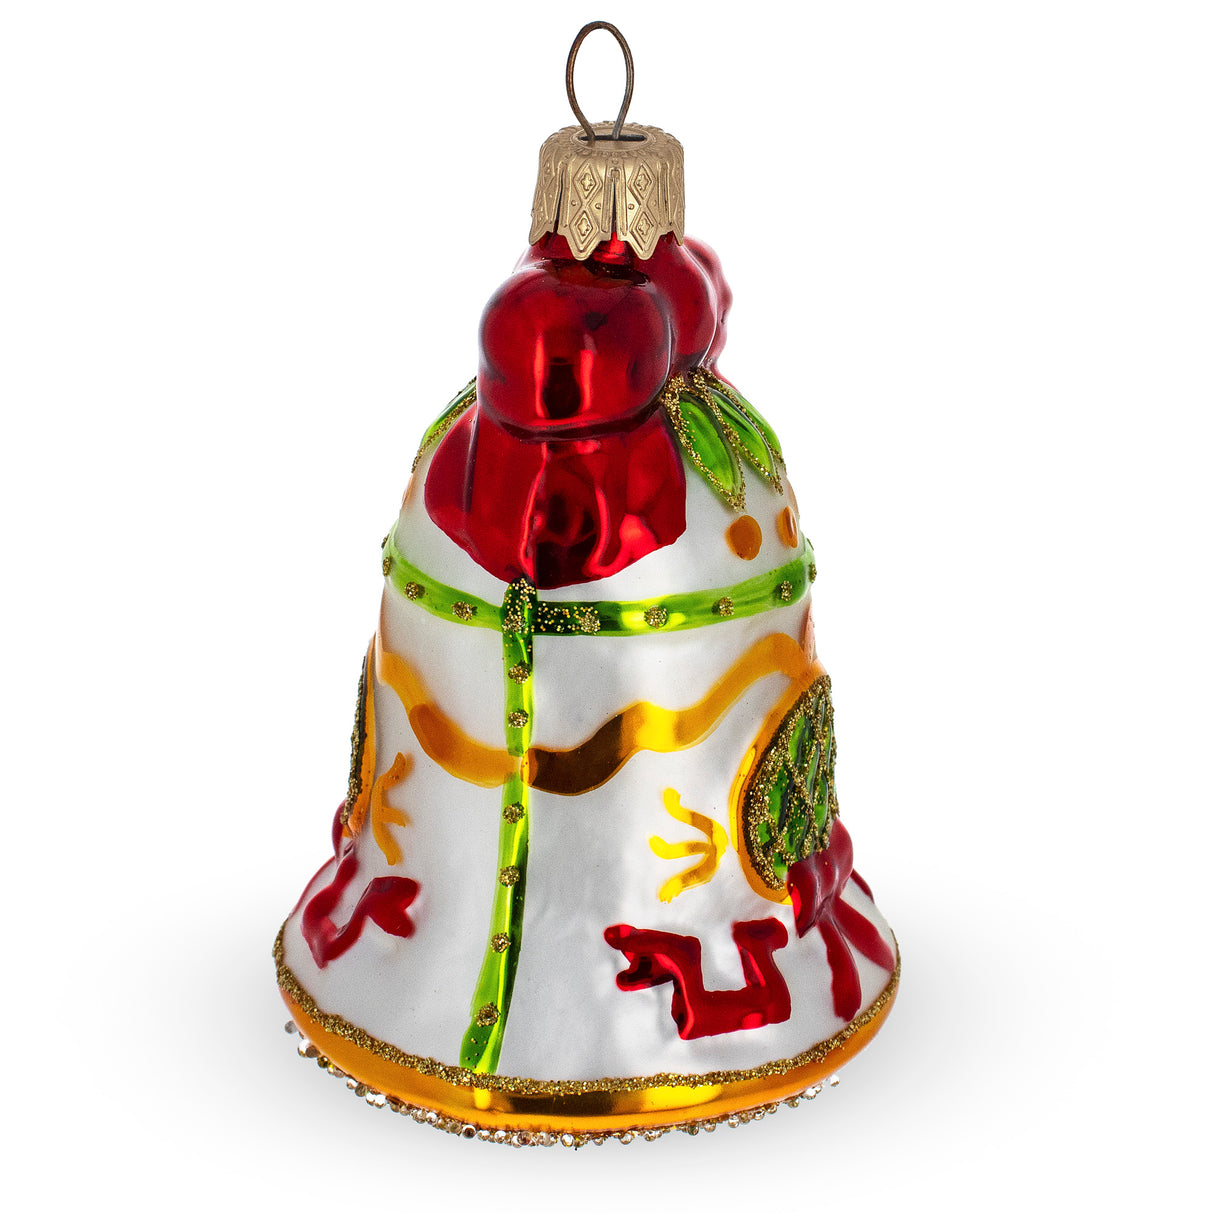 Buy Christmas Ornaments Stars by BestPysanky Online Gift Ship